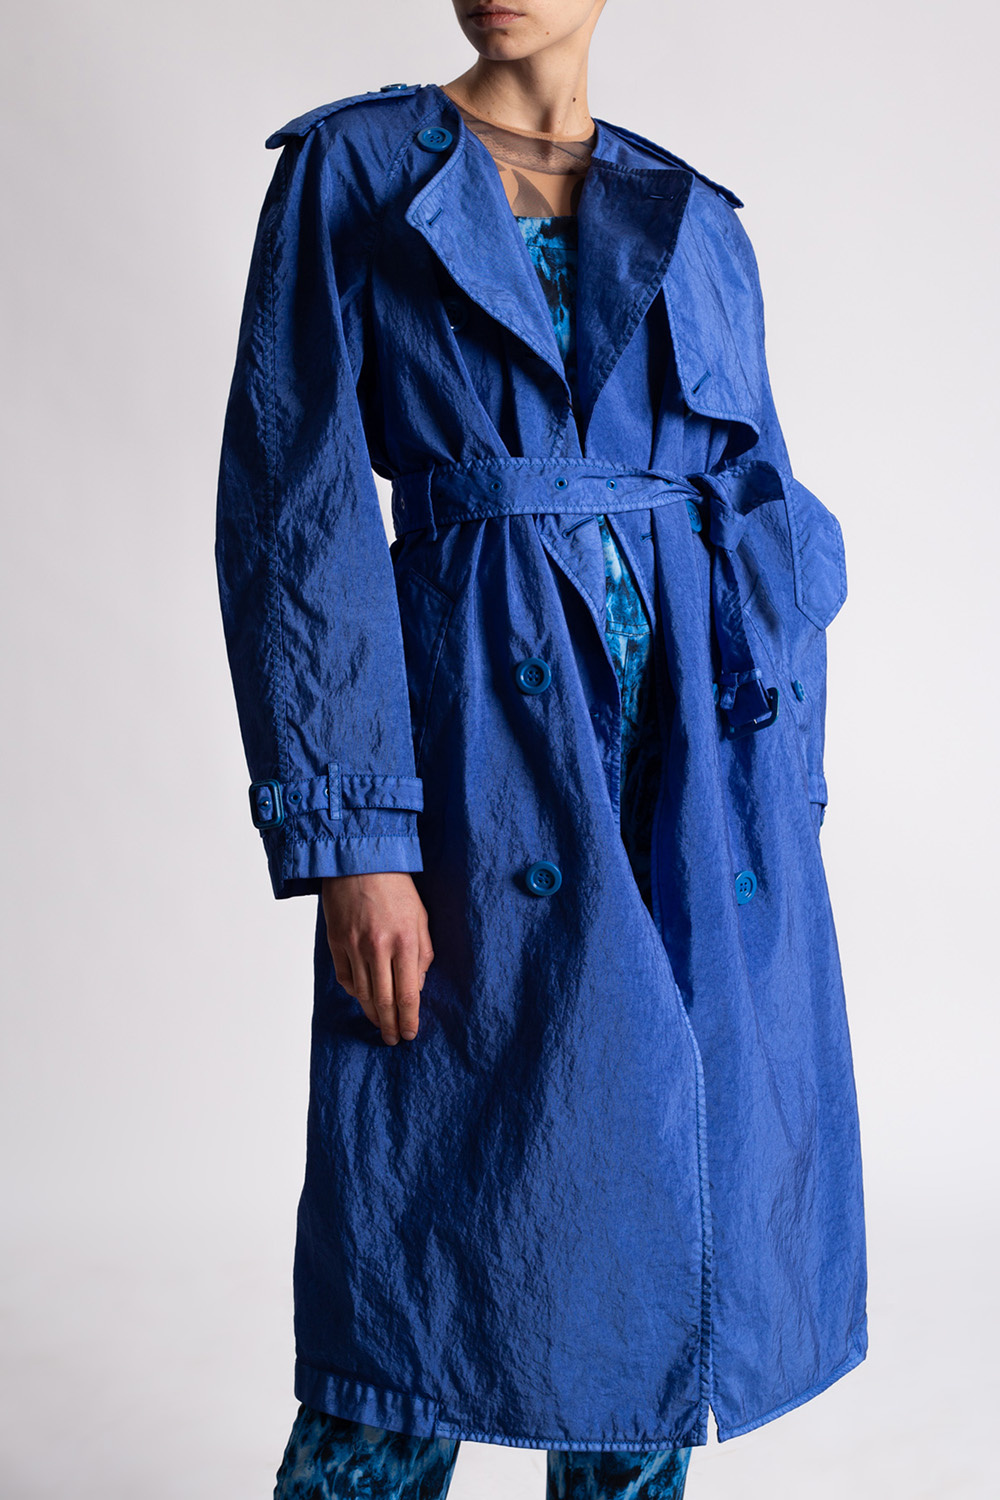 Burberry Single-vented coat